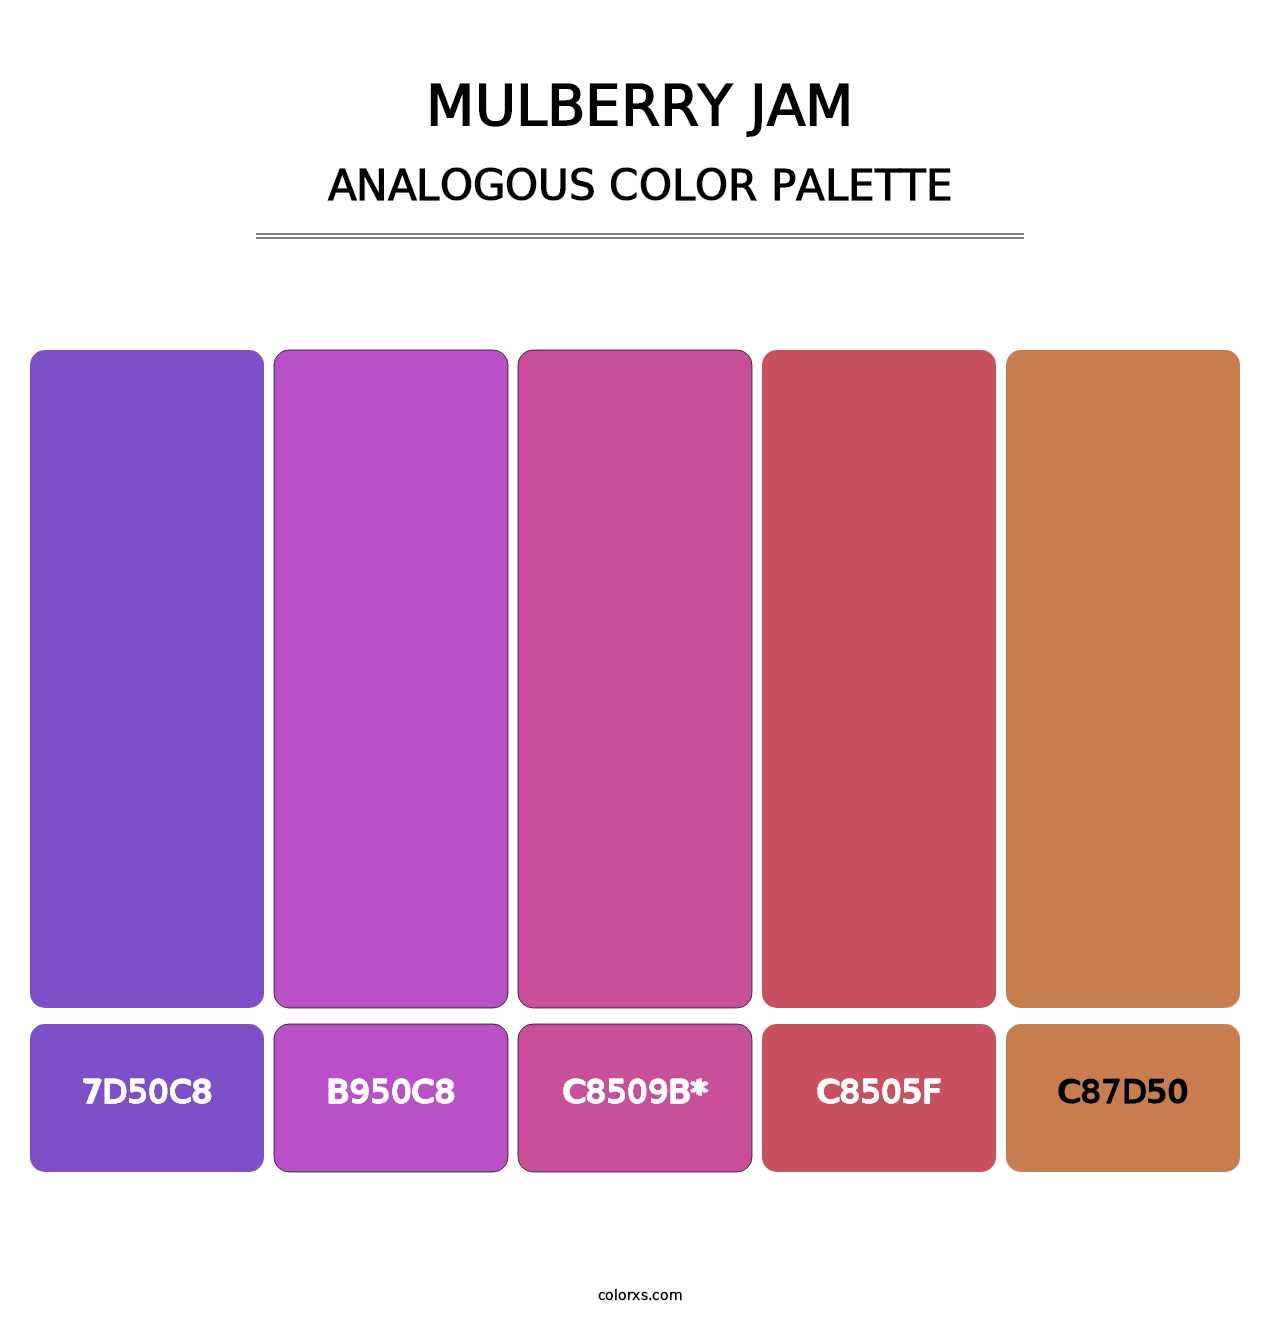 Mulberry Jam - Analogous Color Palette